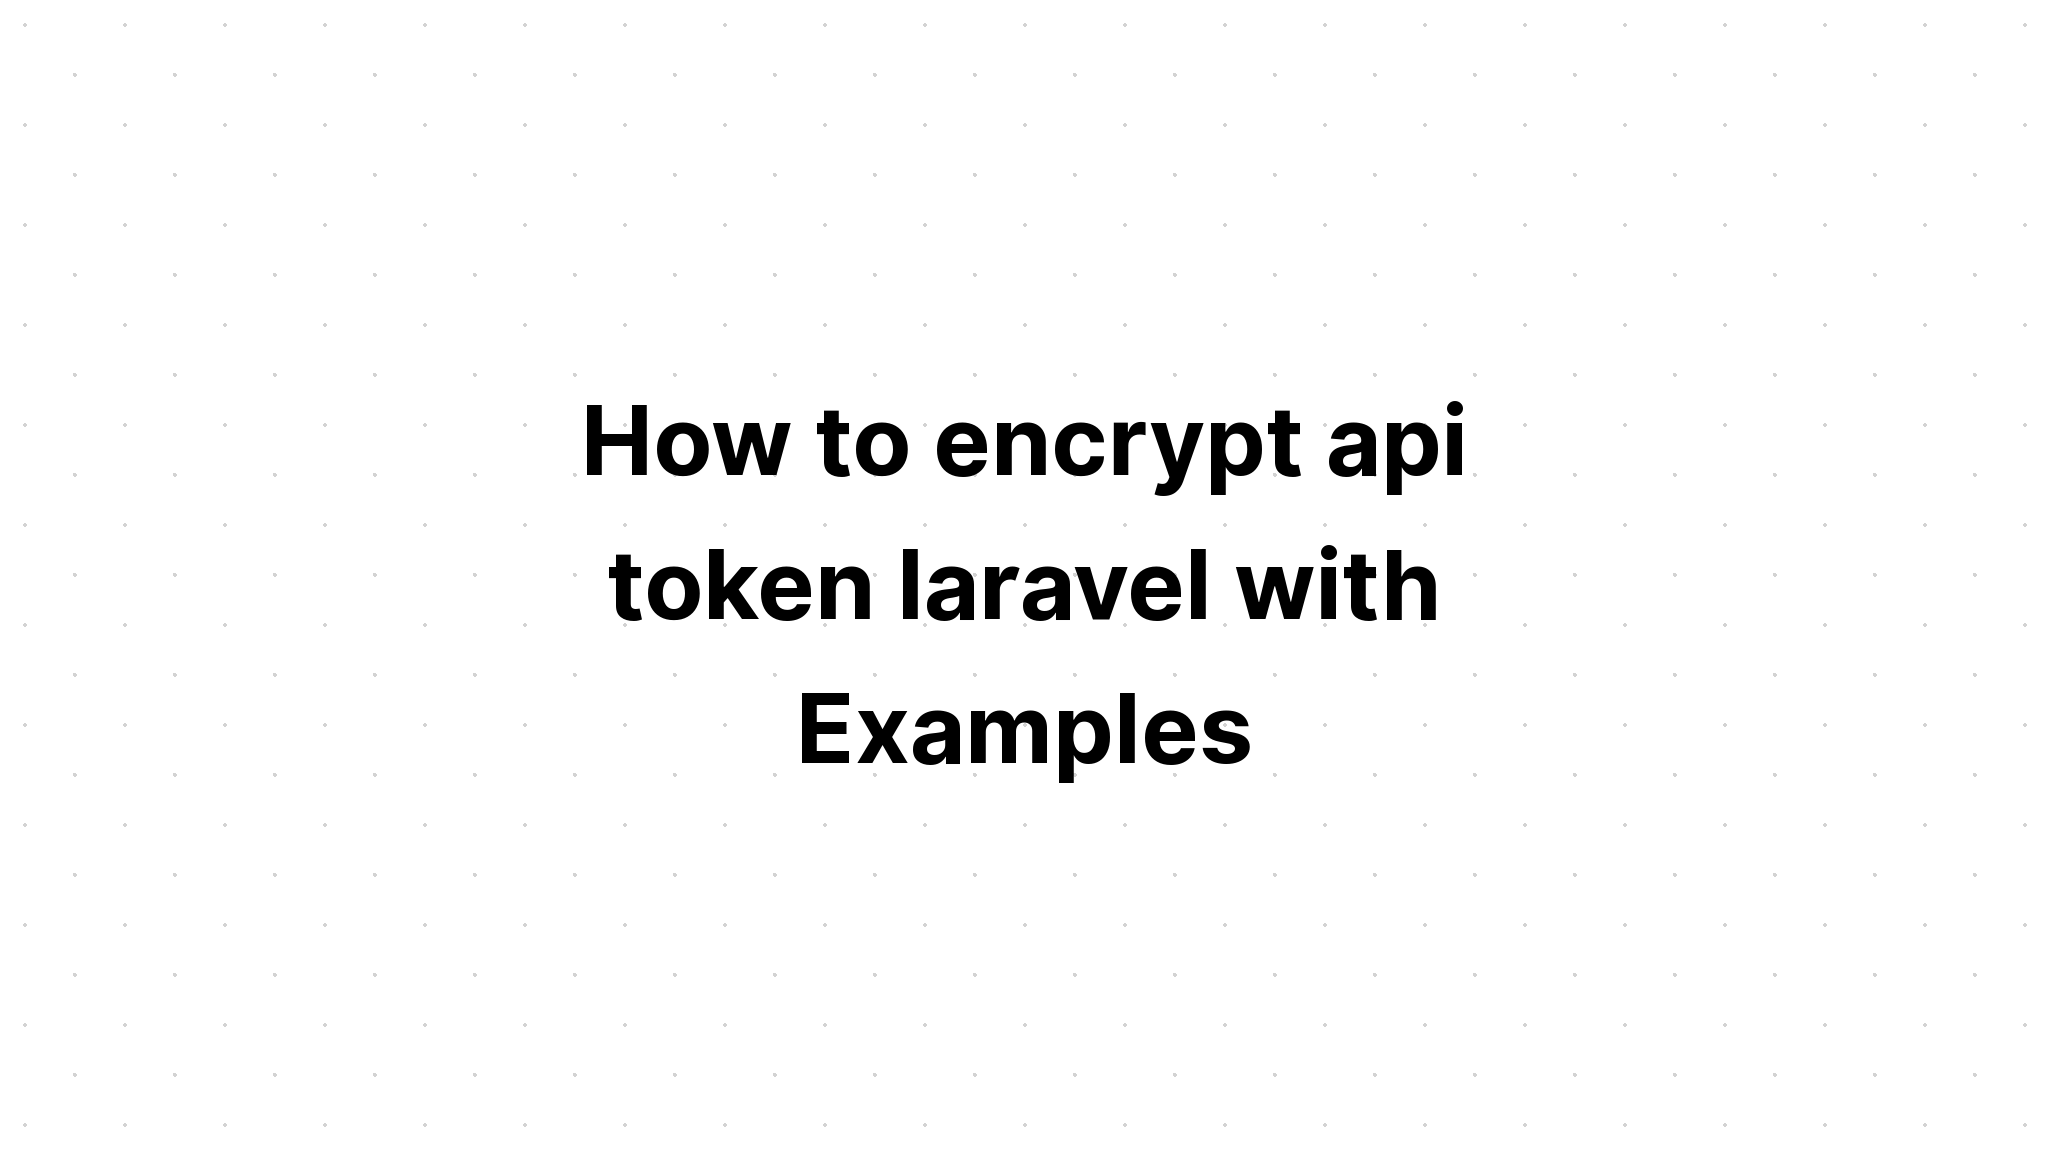 Cách mã hóa api token laravel với các ví dụ